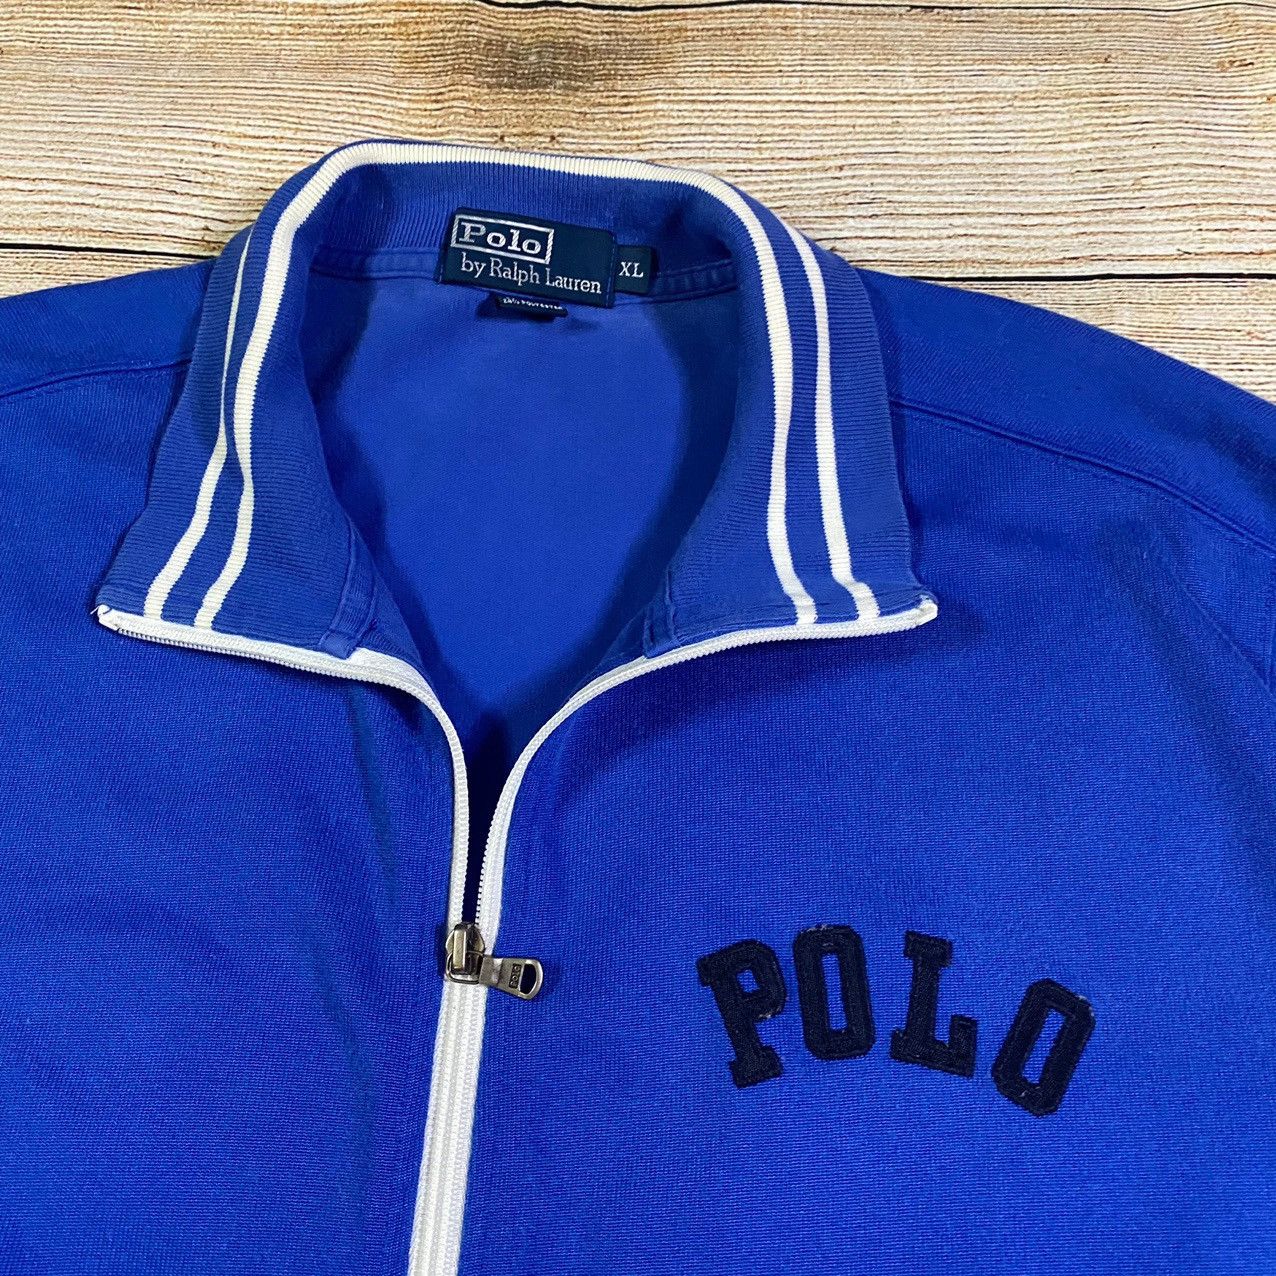 Polo Ralph Lauren Vintage Late 1980’s Polo Ralph Lauren Track Jacket XL Size US XL / EU 56 / 4 - 3 Thumbnail